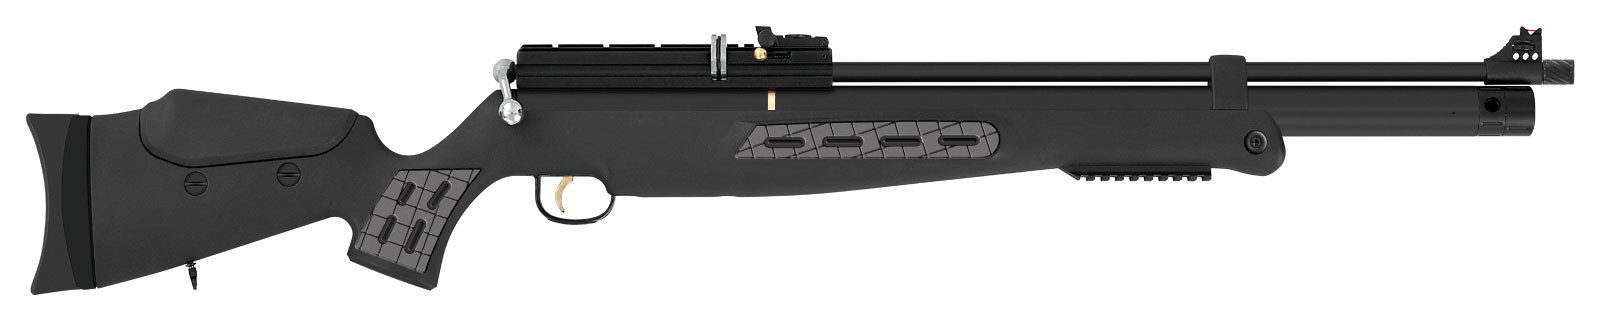 Пневматическая винтовка Hatsan BT 65 RB (PCP)